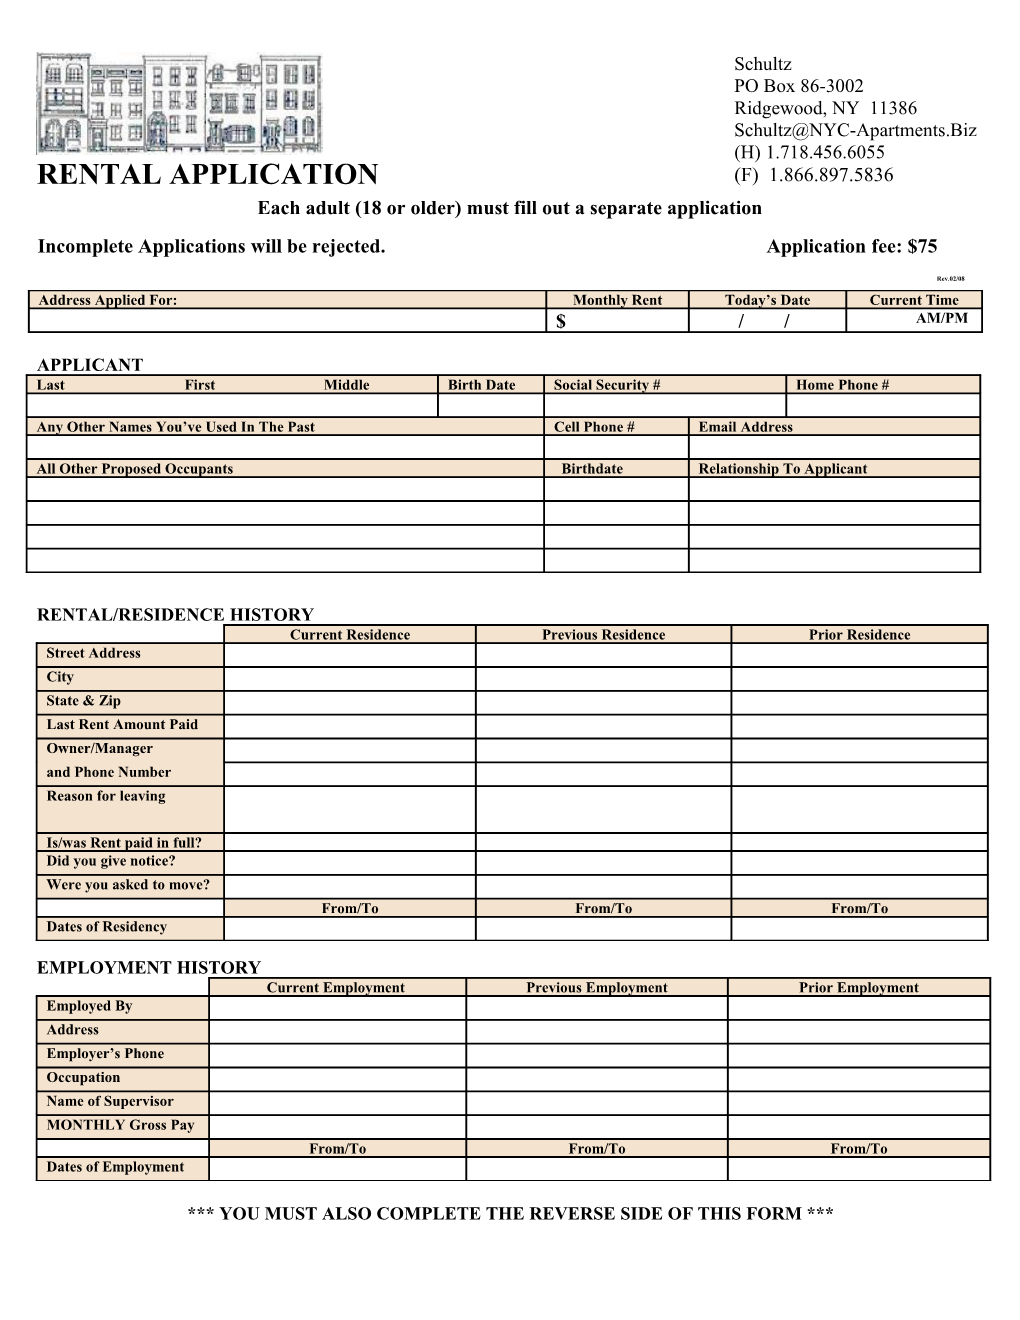 Rental/Residence History